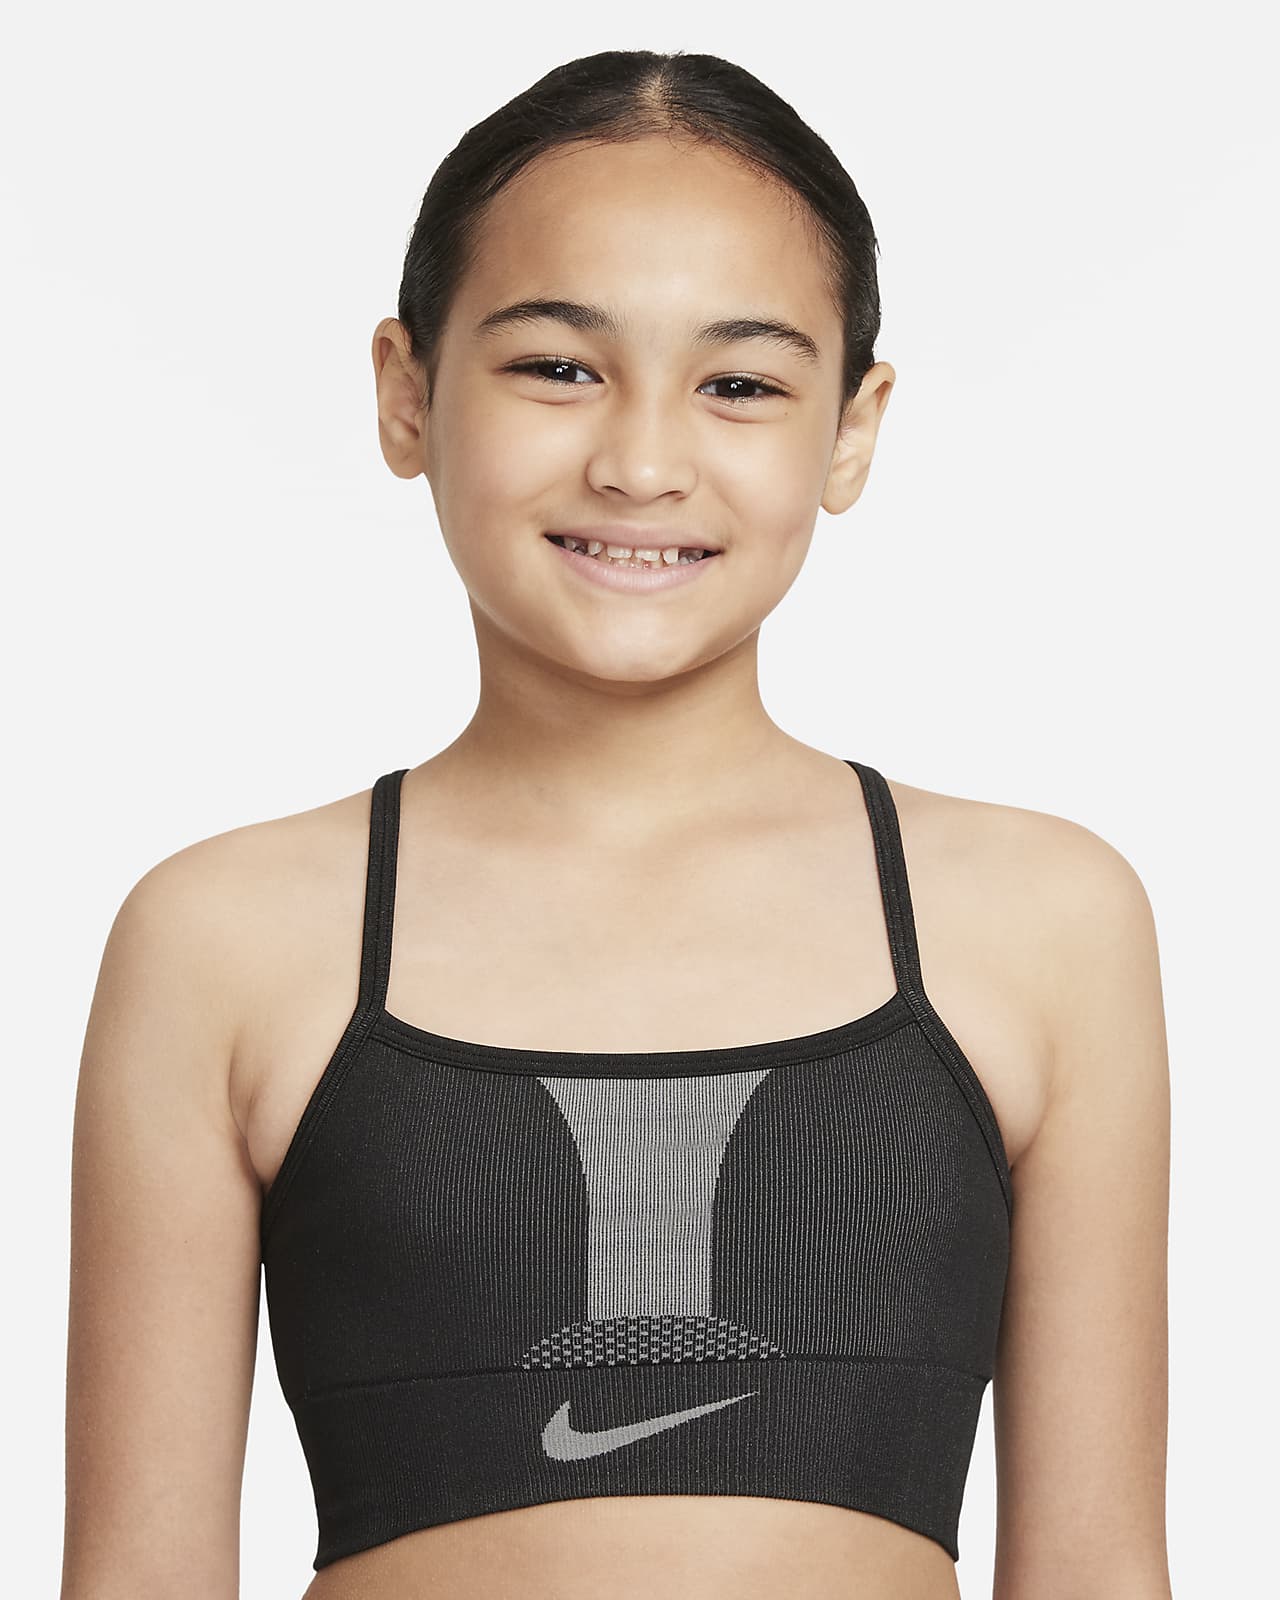 Nike Indy Older Kids' (Girls') Sports Bra